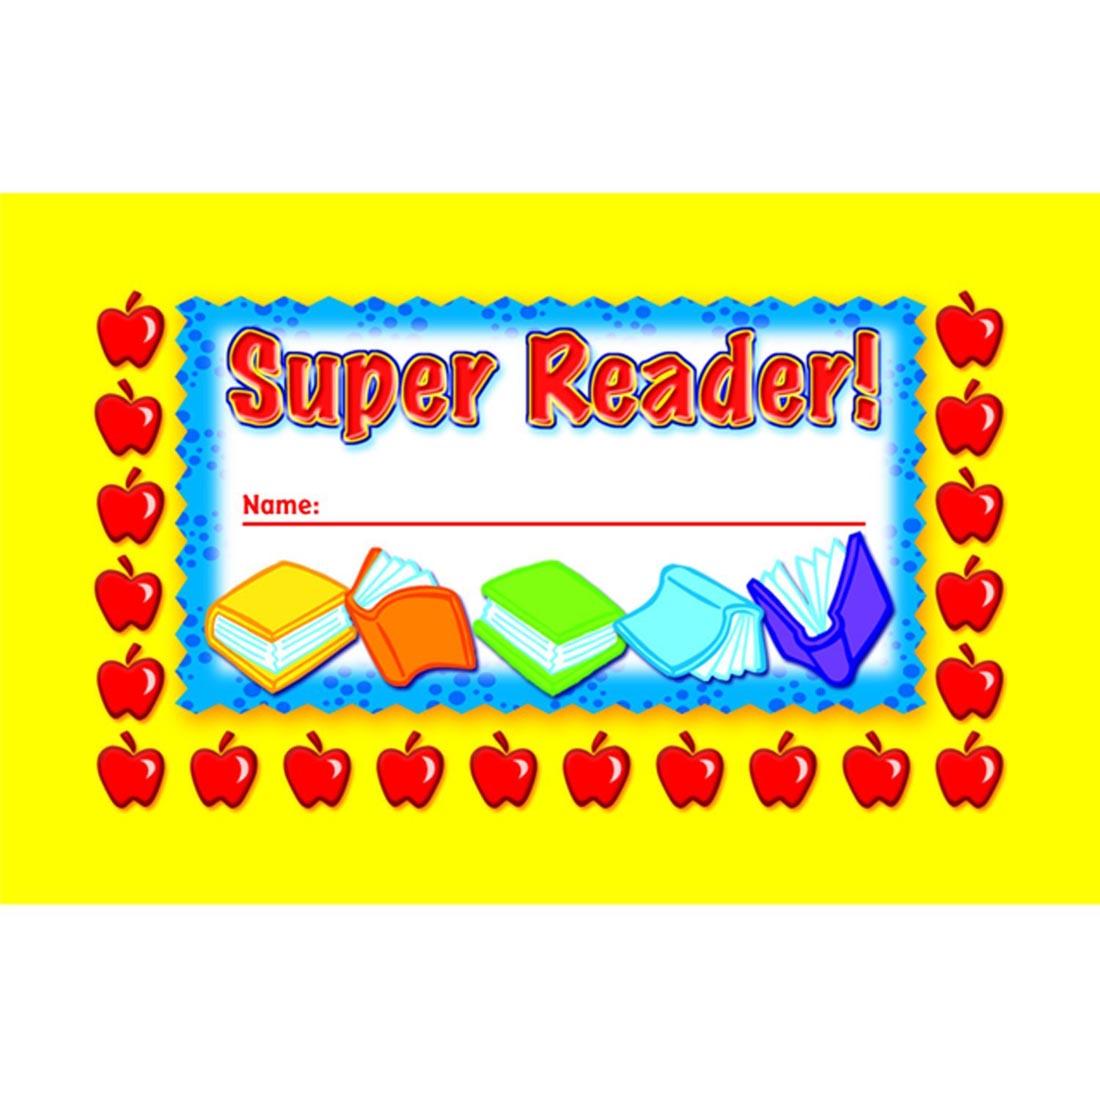 Super Reader Incentive Punch Cards